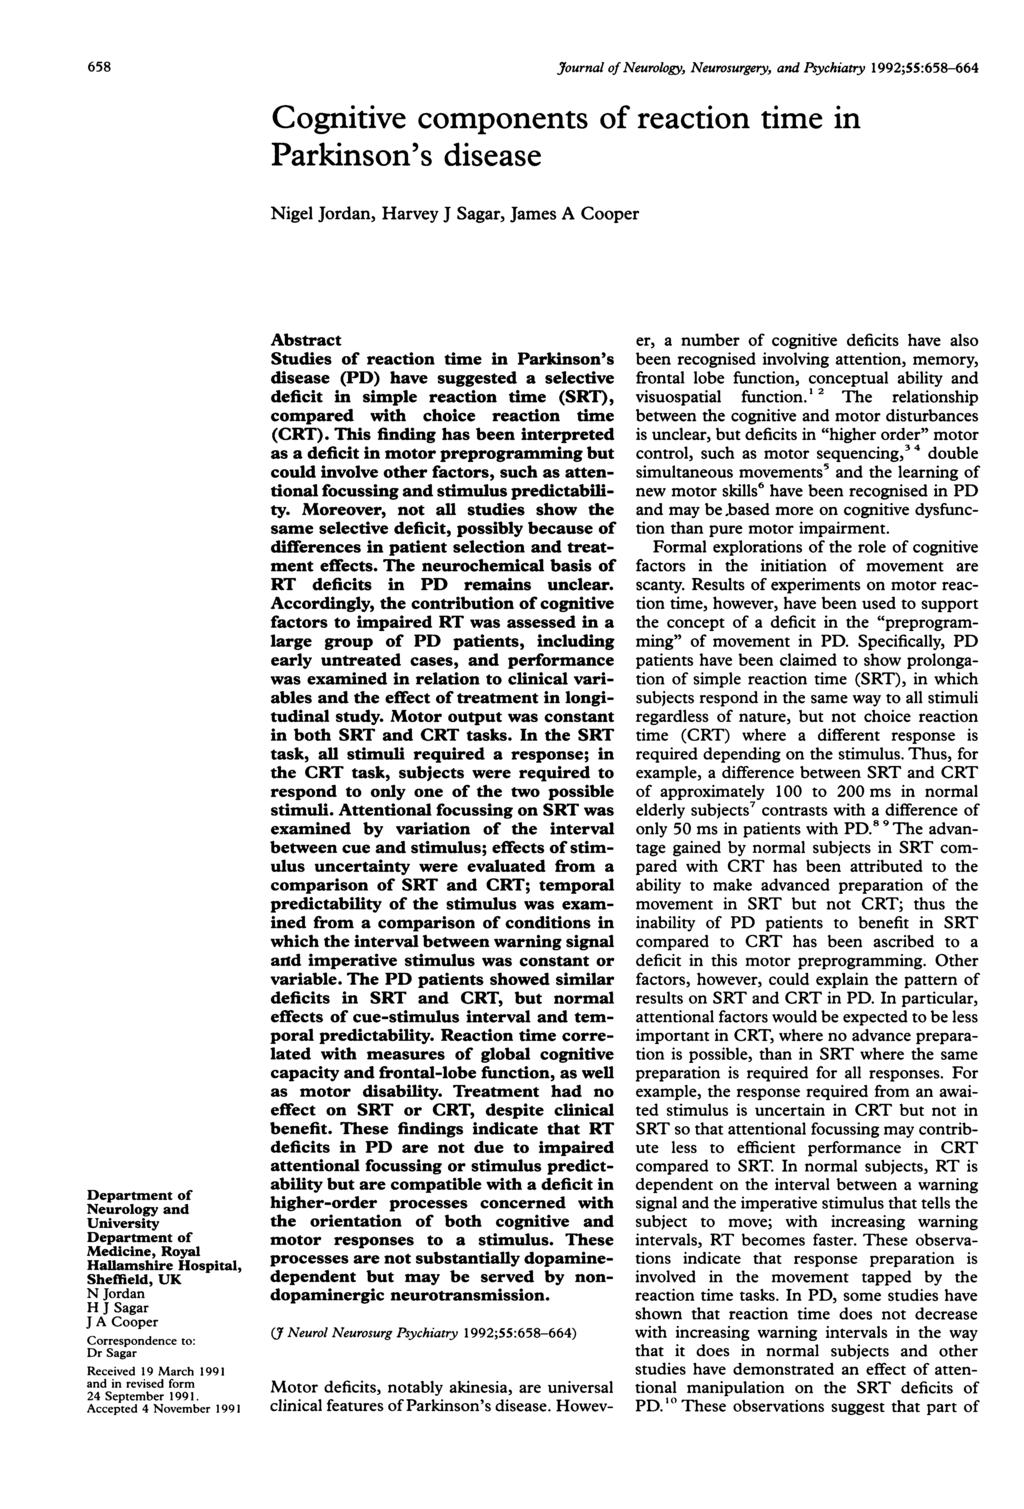 658 6Journal of Neurology, Neurosurgery, and Psychiatry 1992;55:658-664 Department of Neurology and University Department of Medicine, Royal Hallamshire Hospital, Sheffield, UK N Jordan H J Sagar J A